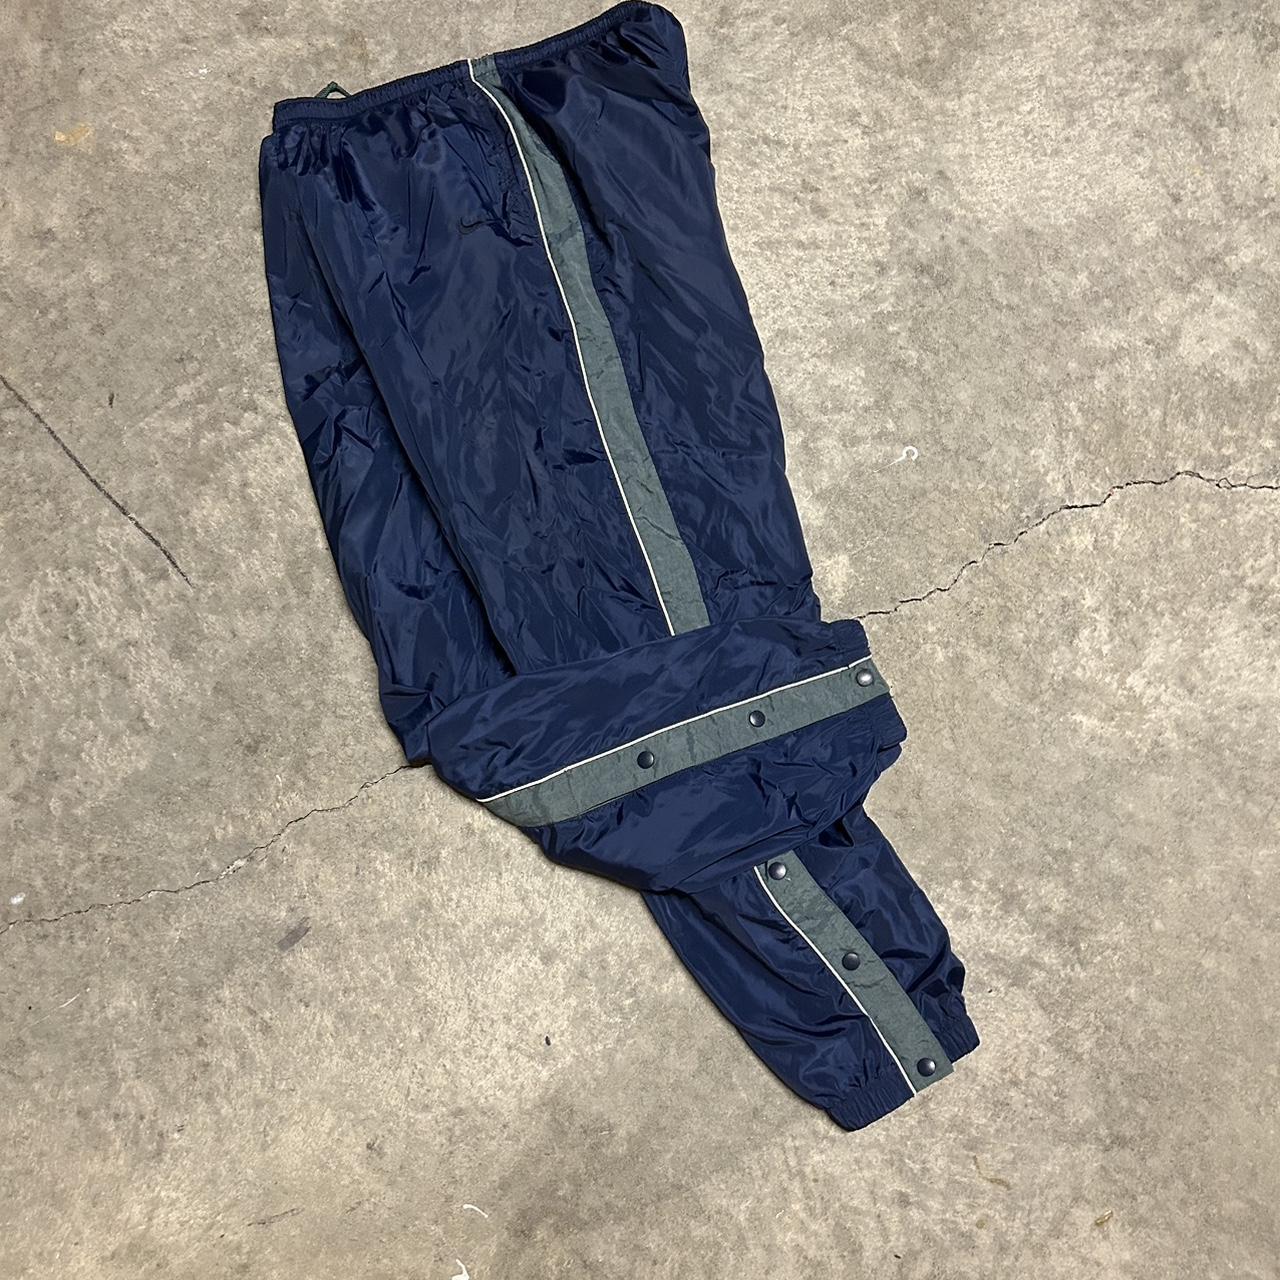 nike parachute pants / track pants / tracksuit - Depop